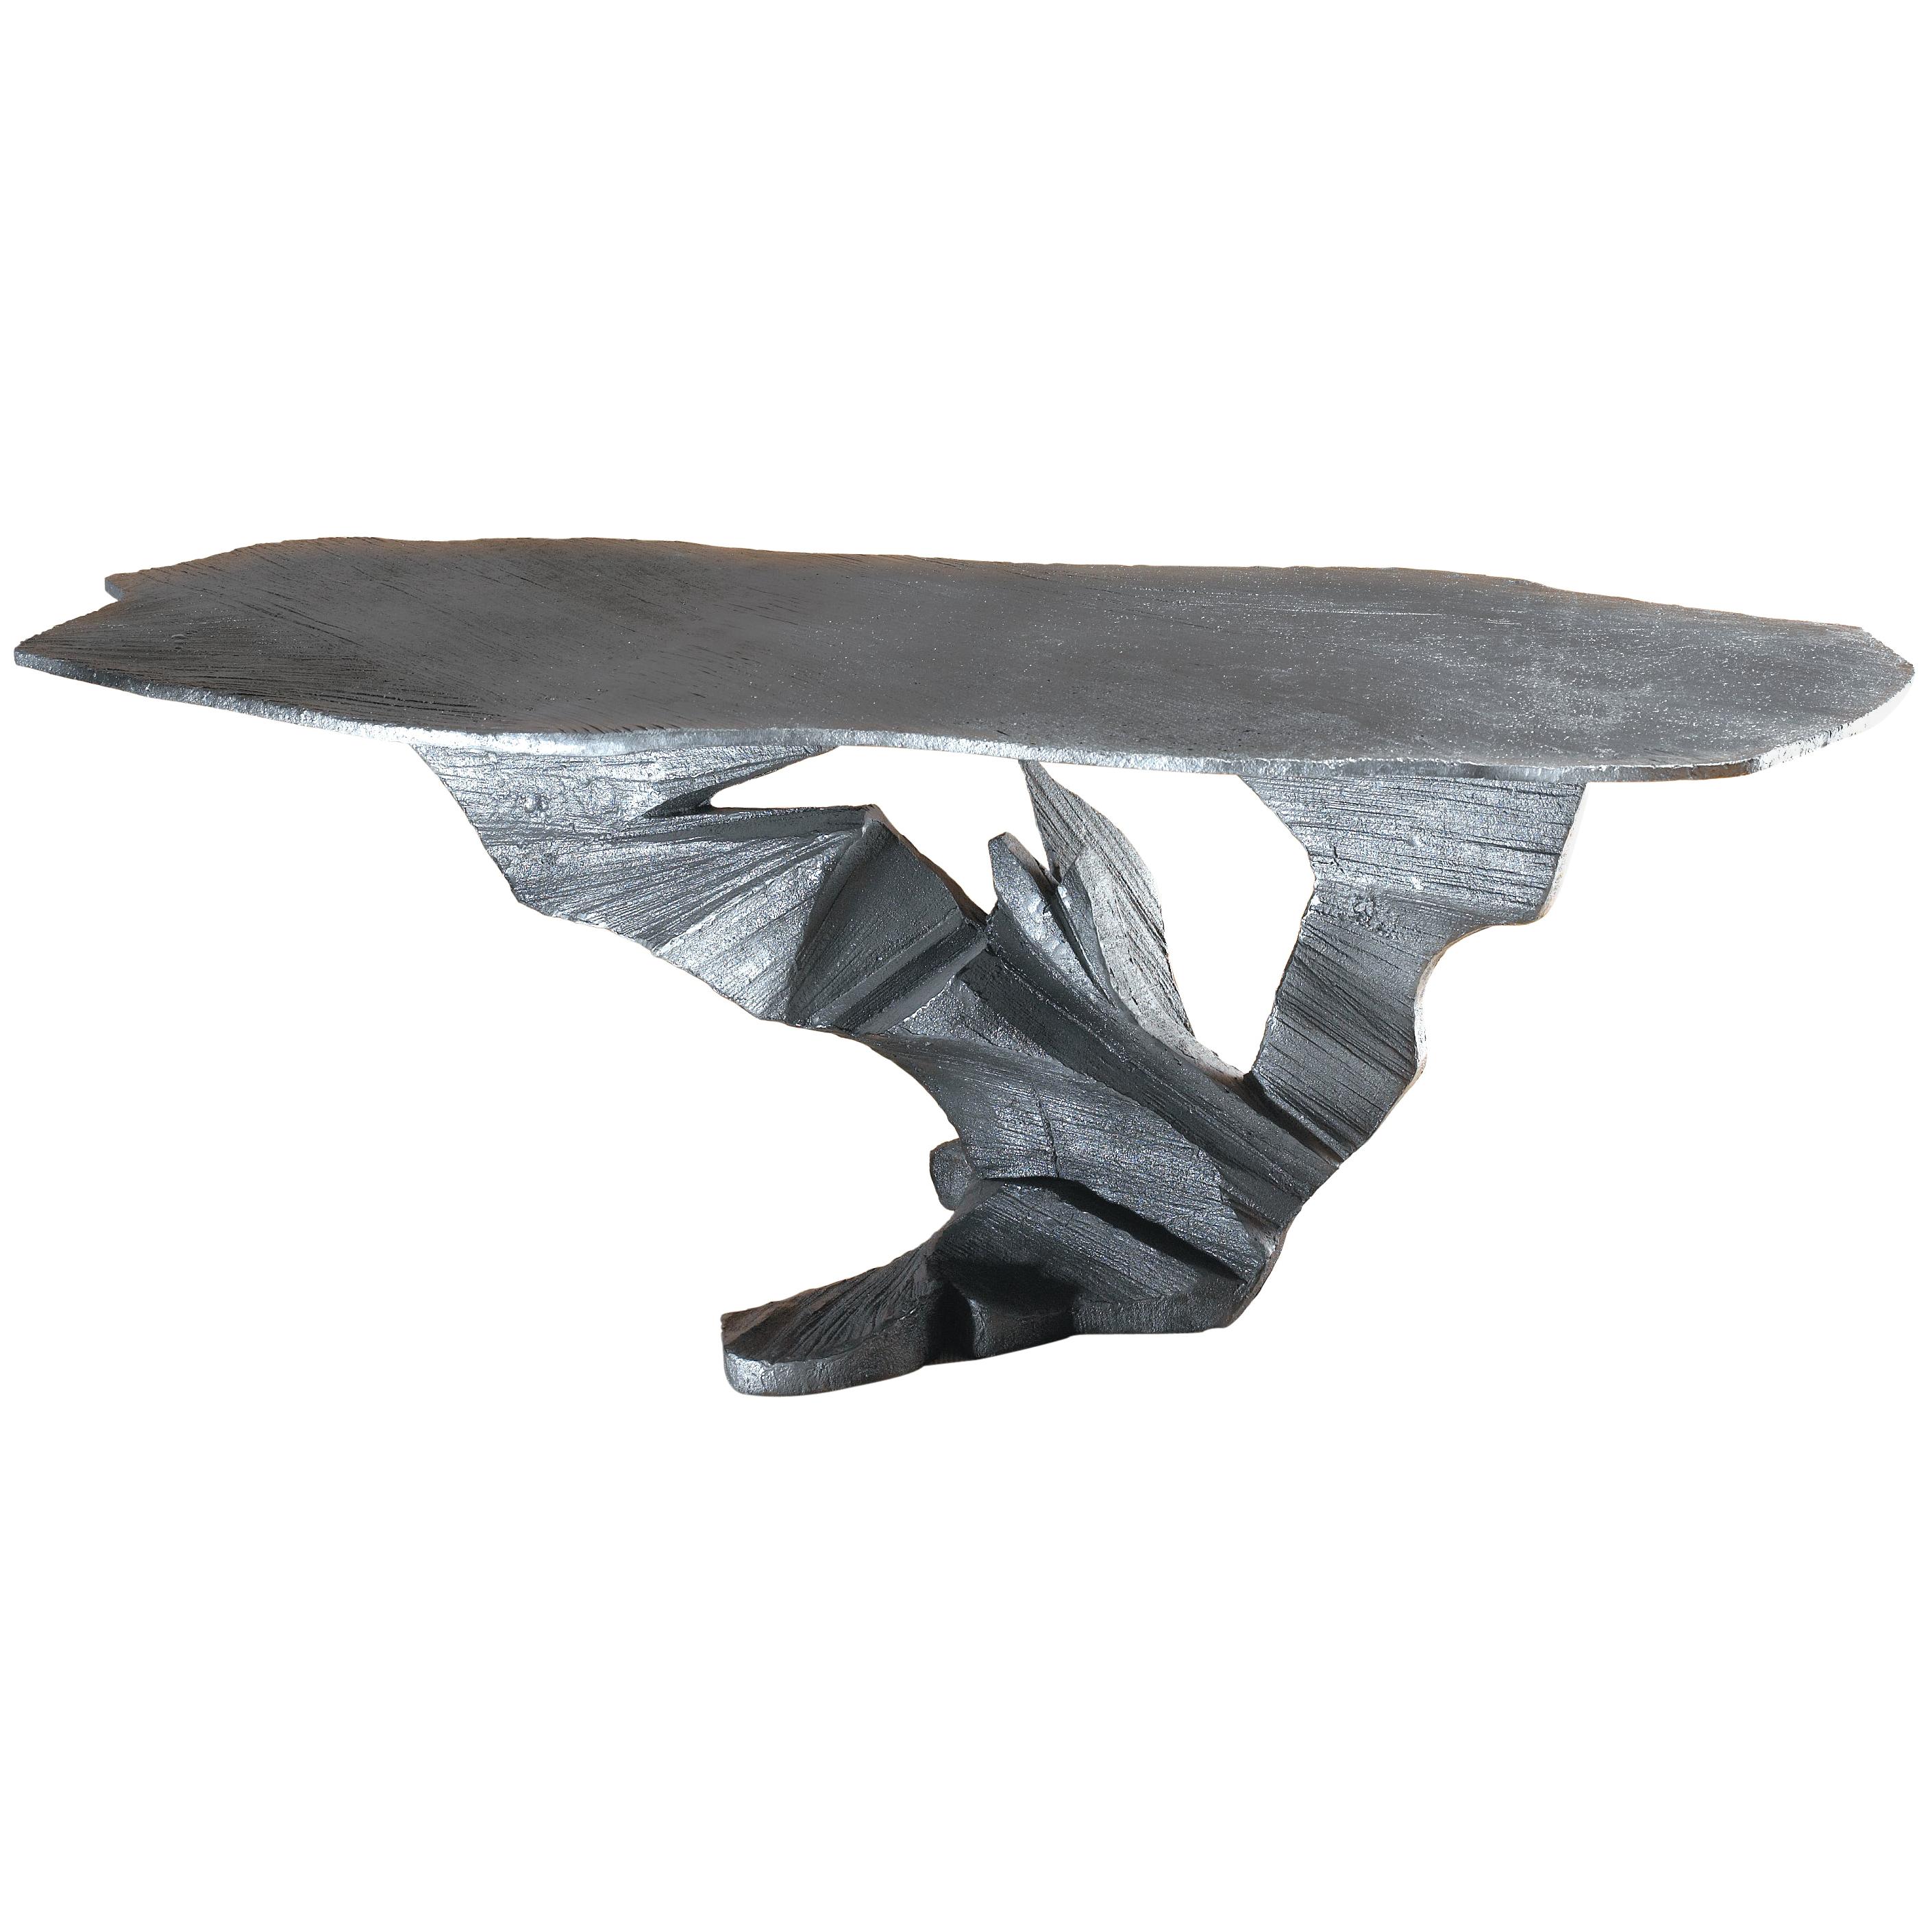 Ansel Adams Inspired Sculpted Cast Aluminum Table